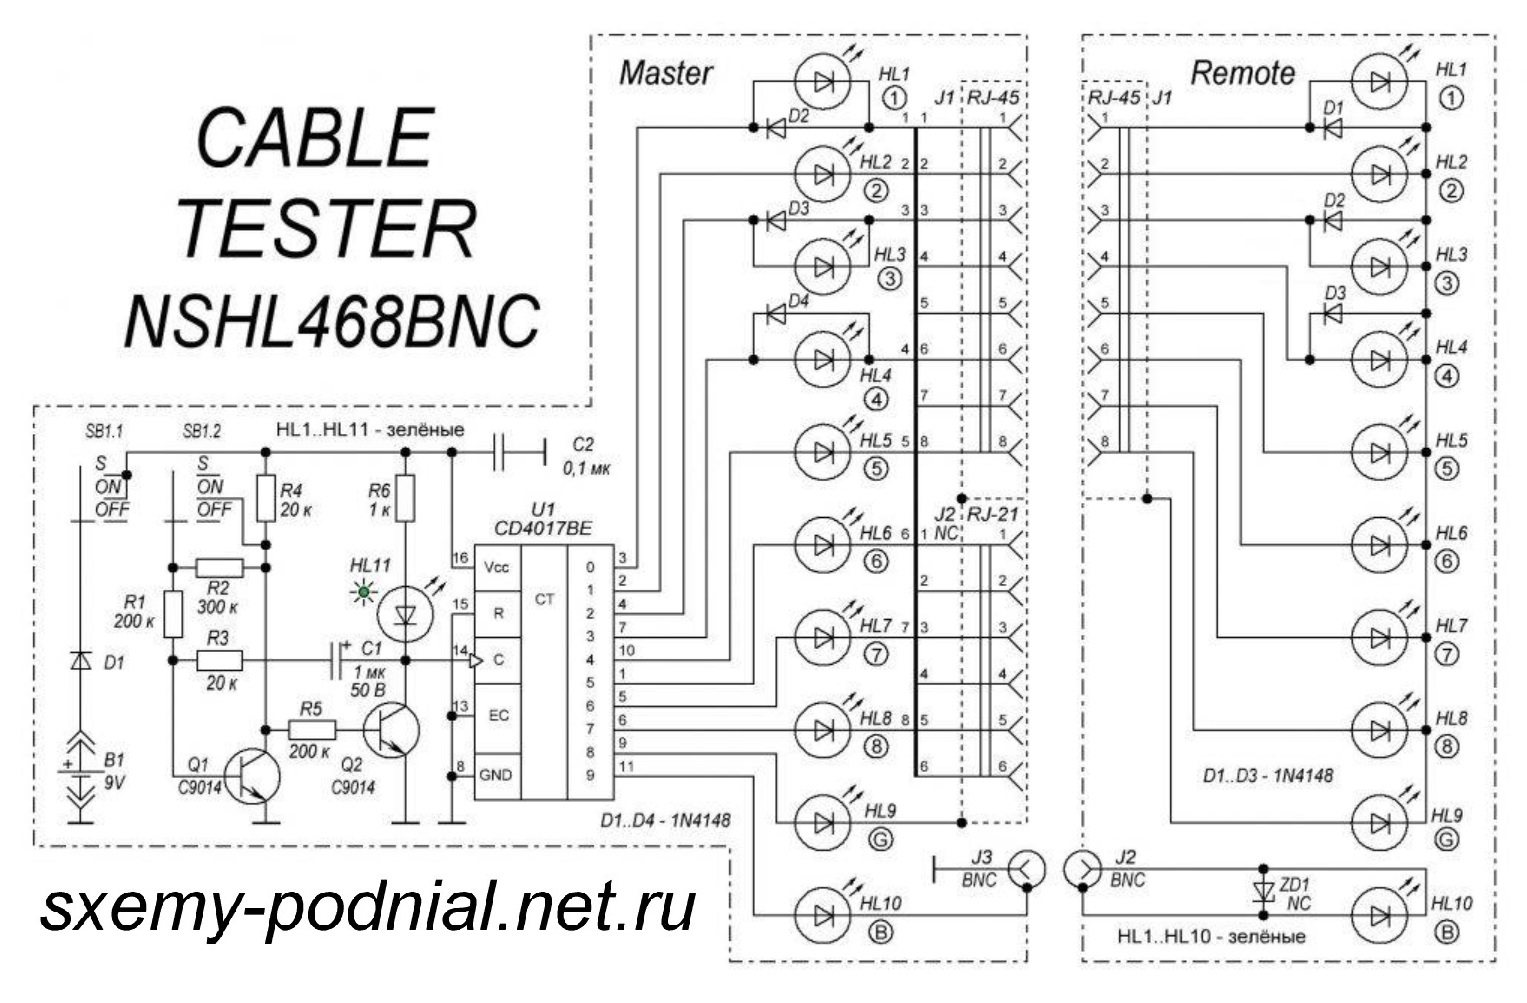 Схема NSHL468BNC — кабельного тестера